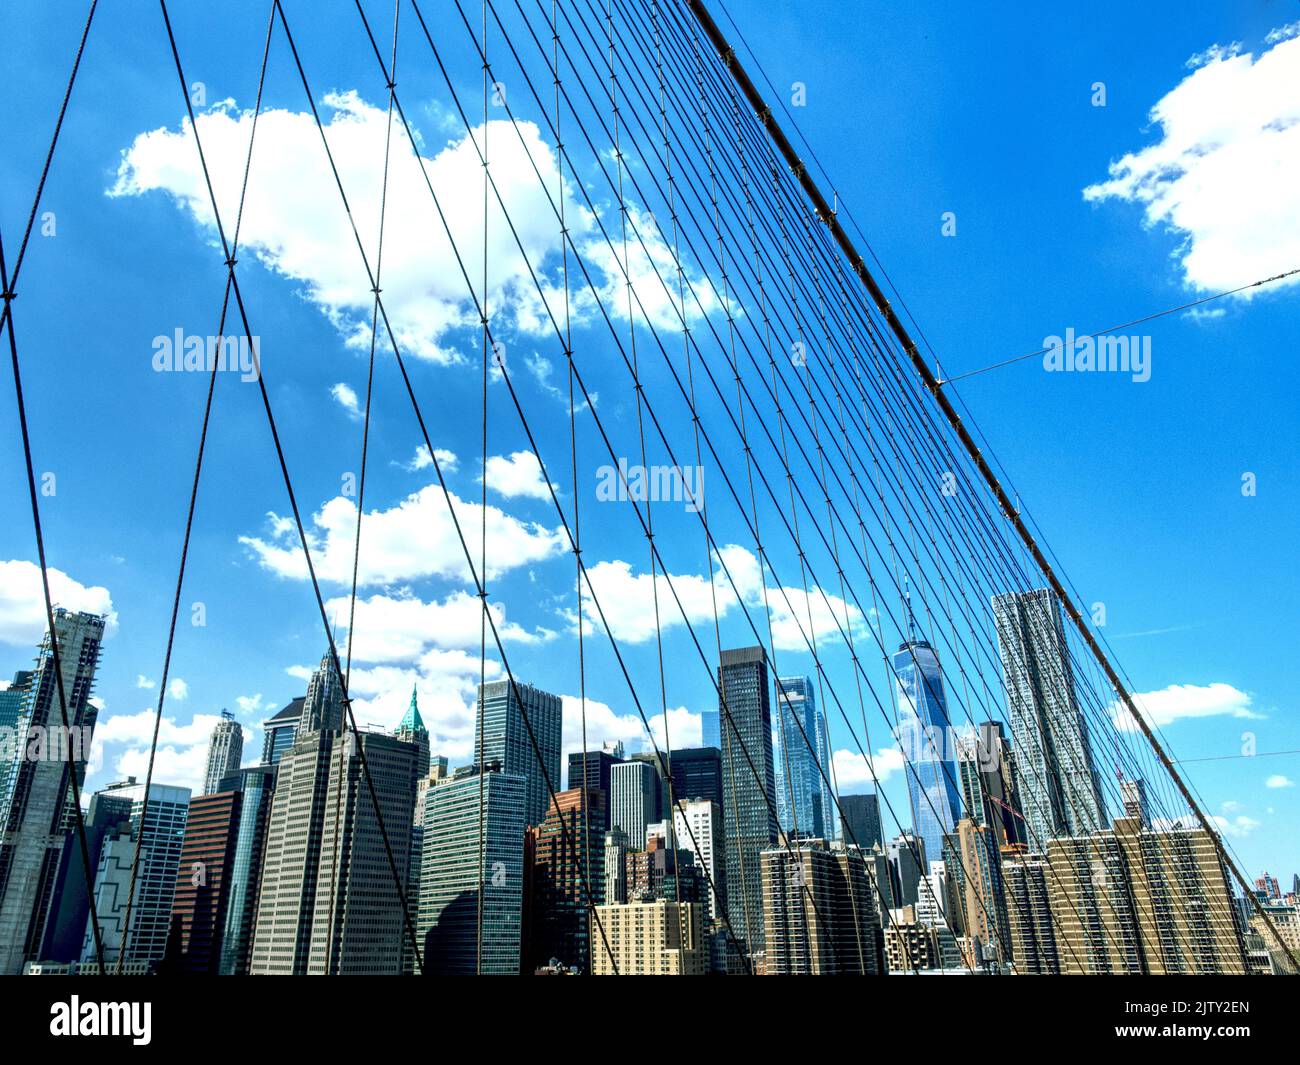 Dal ponte di Brooklyn Stock Photo